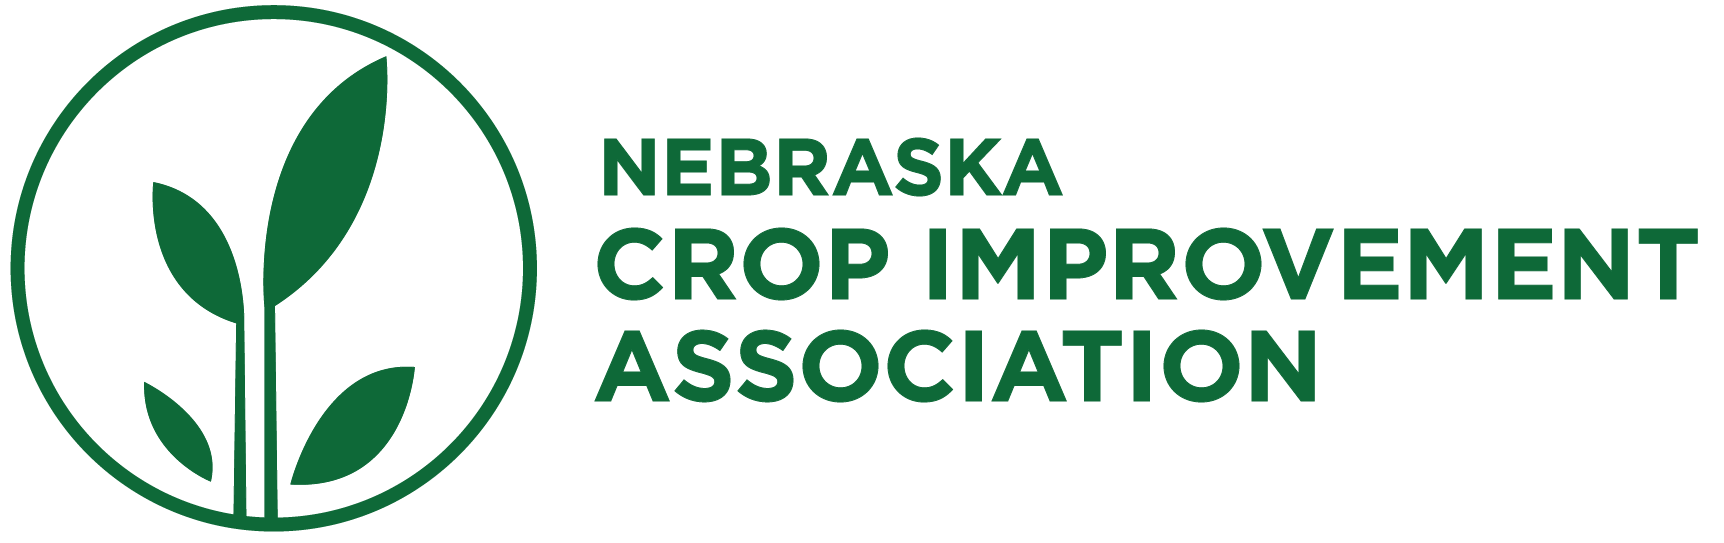 Nebraska Crop Improvement Association logo